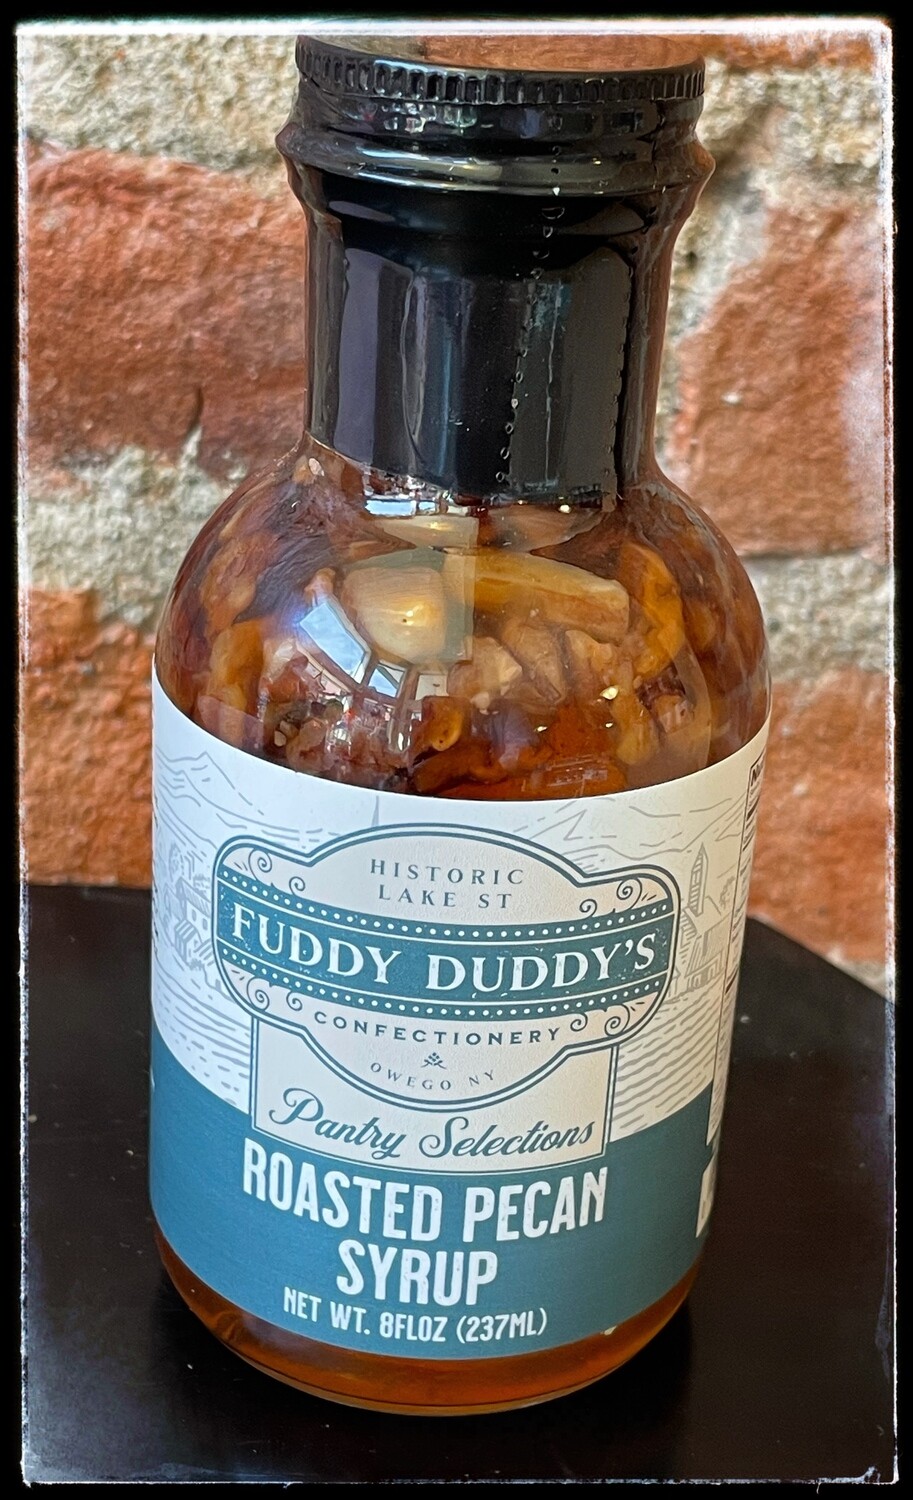 Fuddy Duddy's Roasted Pecan Syrup